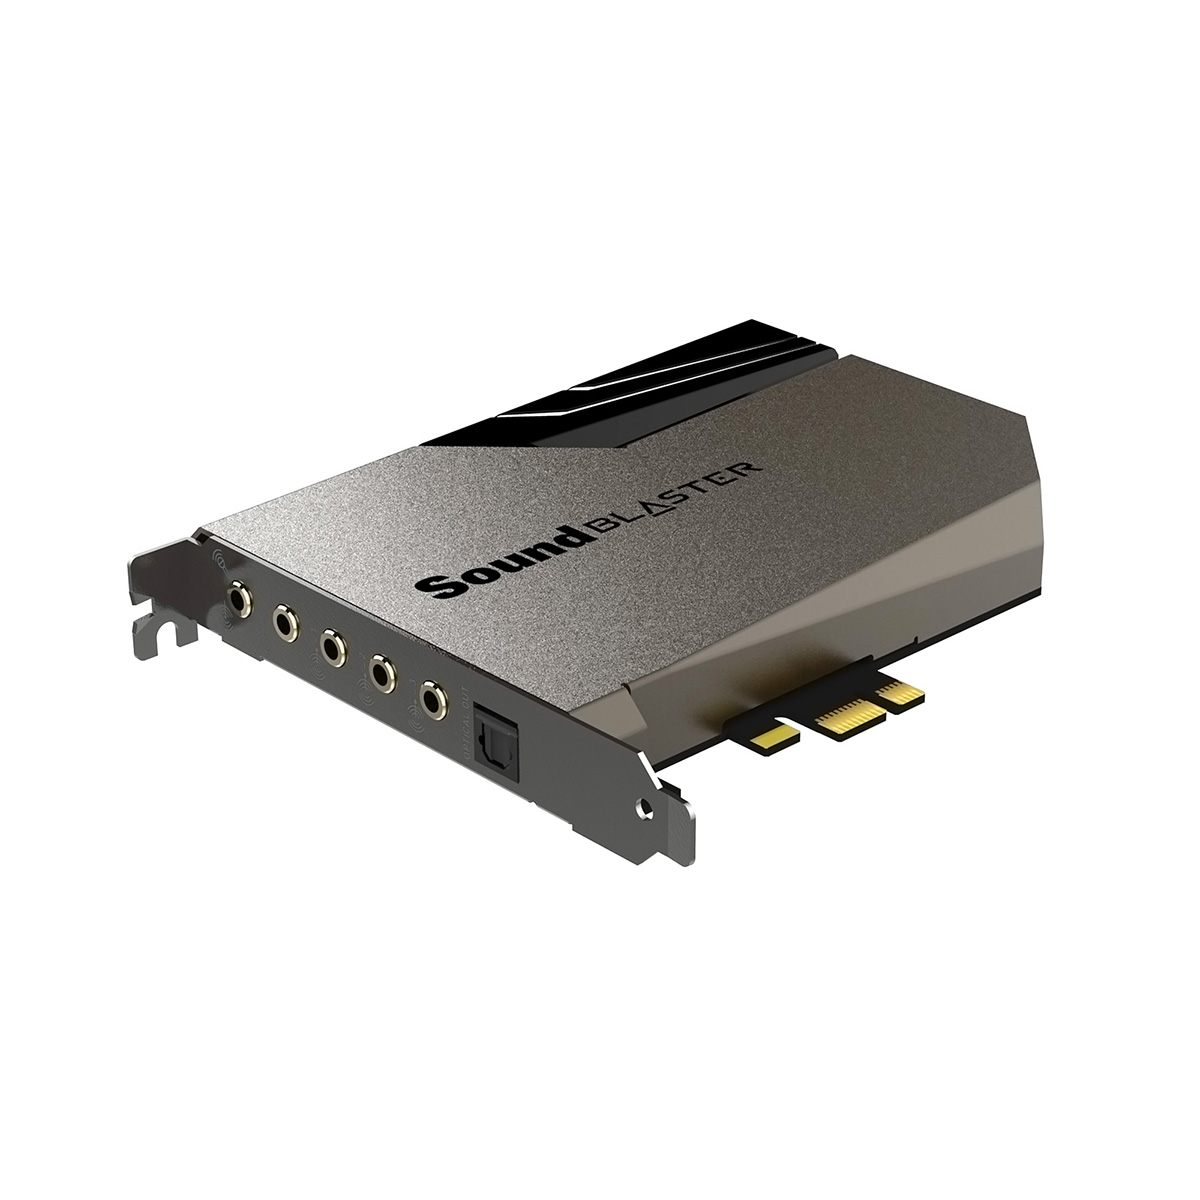 Creative - Creative Sound Blaster AE-7 Hi-res PCI-e DAC and Amp Sound Card with Xamp Discrete Headphone Bi-amp and Audio Control Module